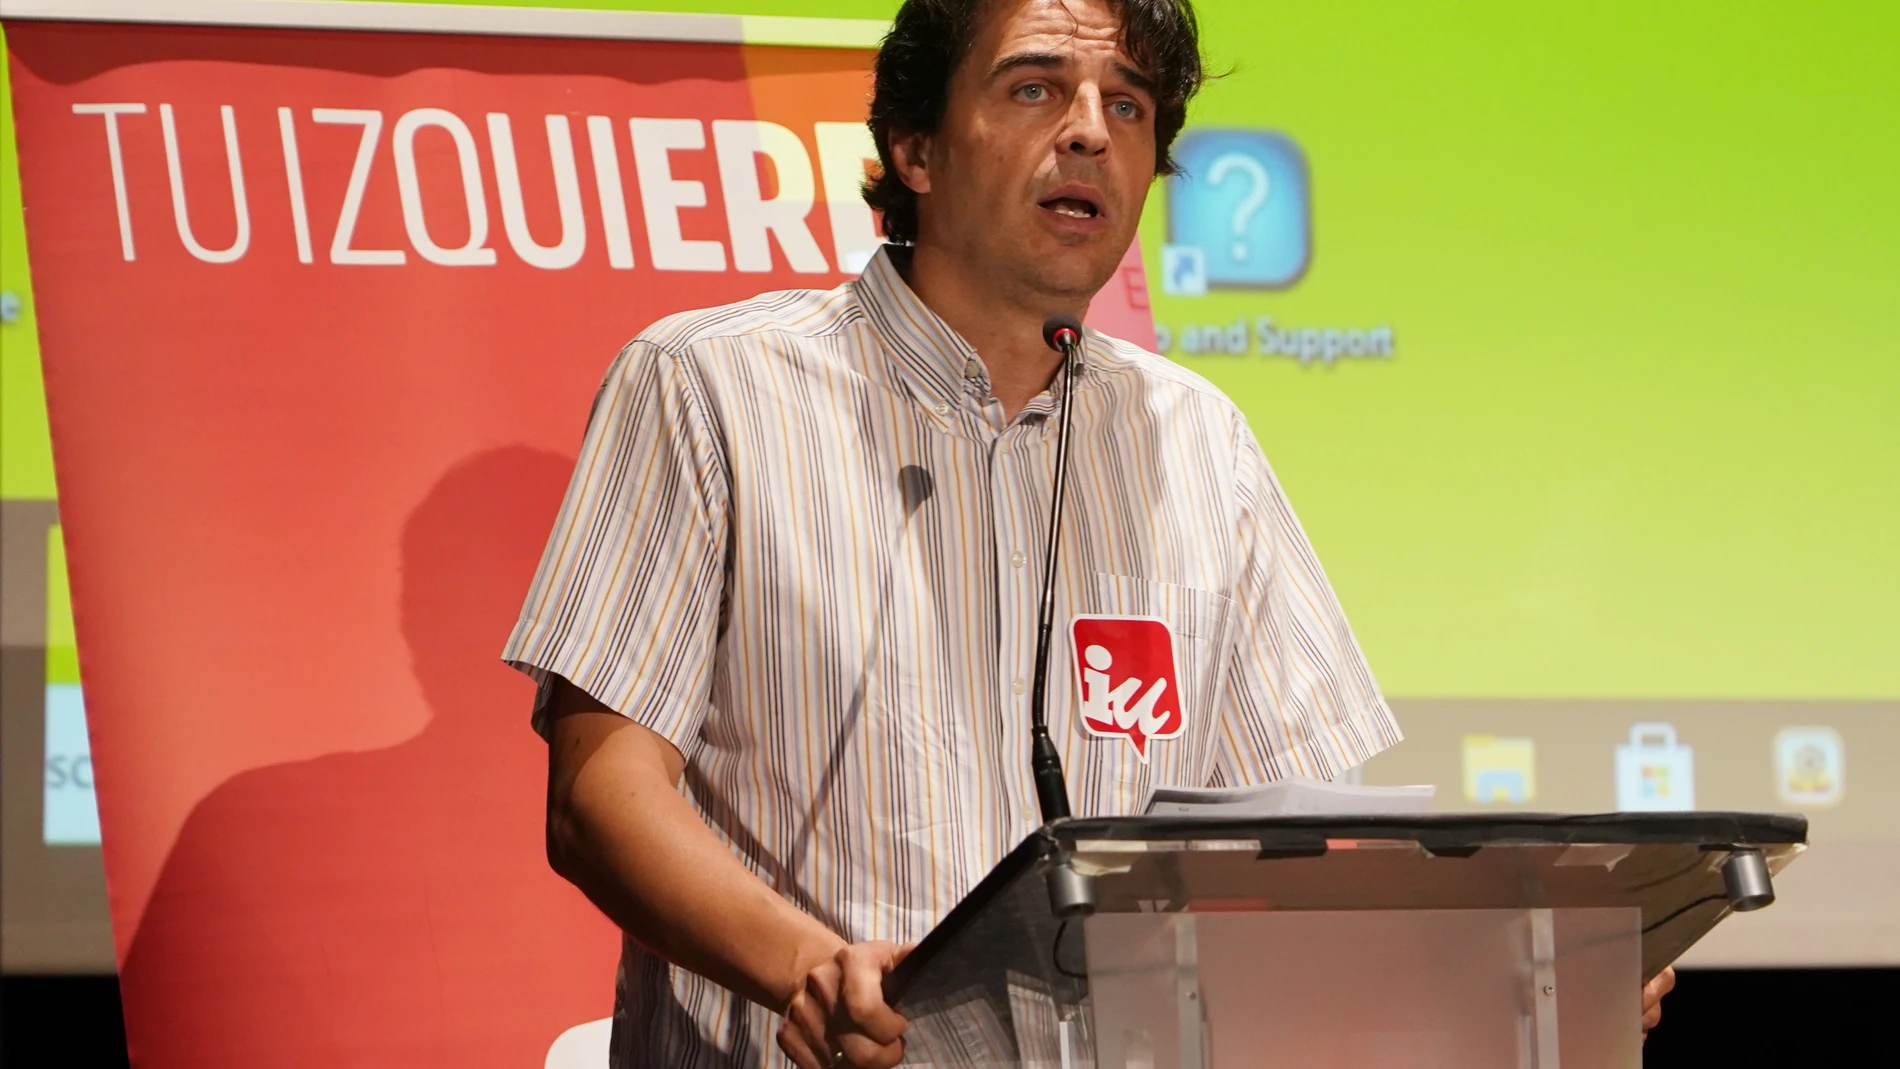 El Coordinador de IUCyL, Juan Gascón